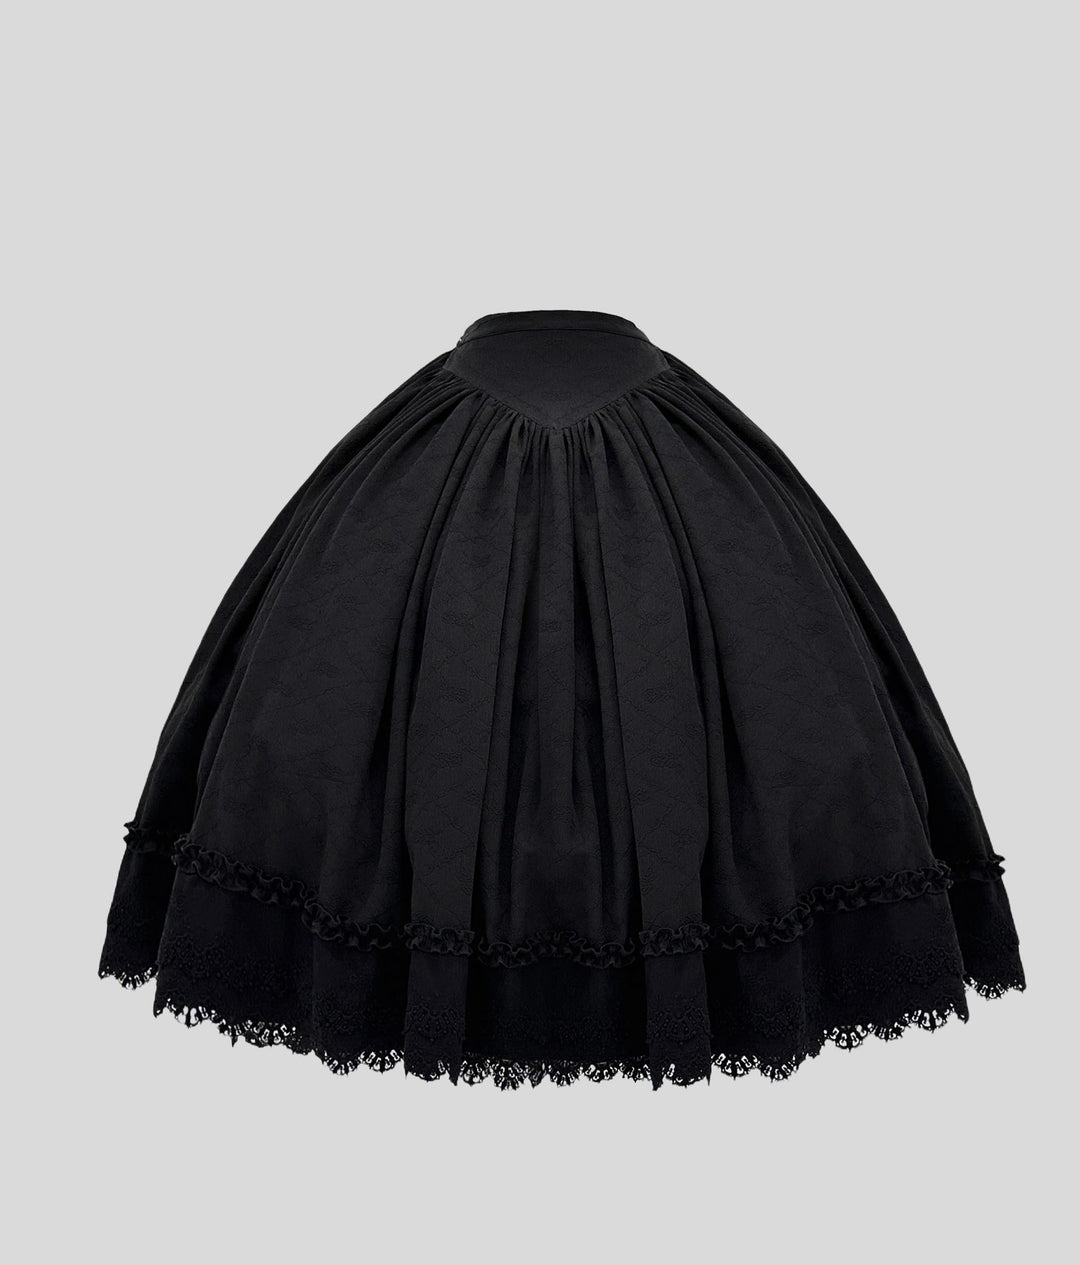 Dark Star Island~Moonlight Sanctum~Gothic Lolita Dresses Suit JSK SK Shirt XS Black Long SK 